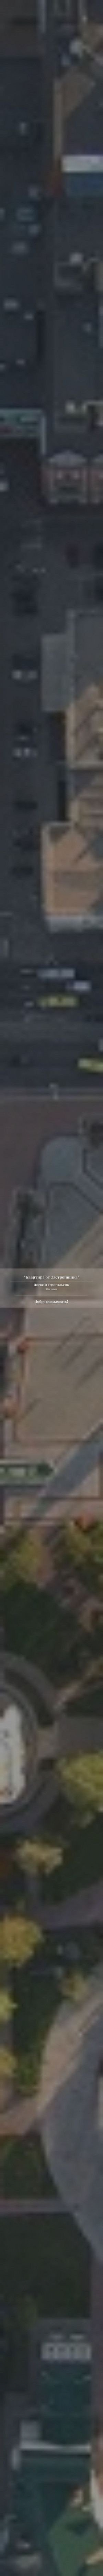 Предпросмотр для www.dn39.ru — Департамент Недвижимости